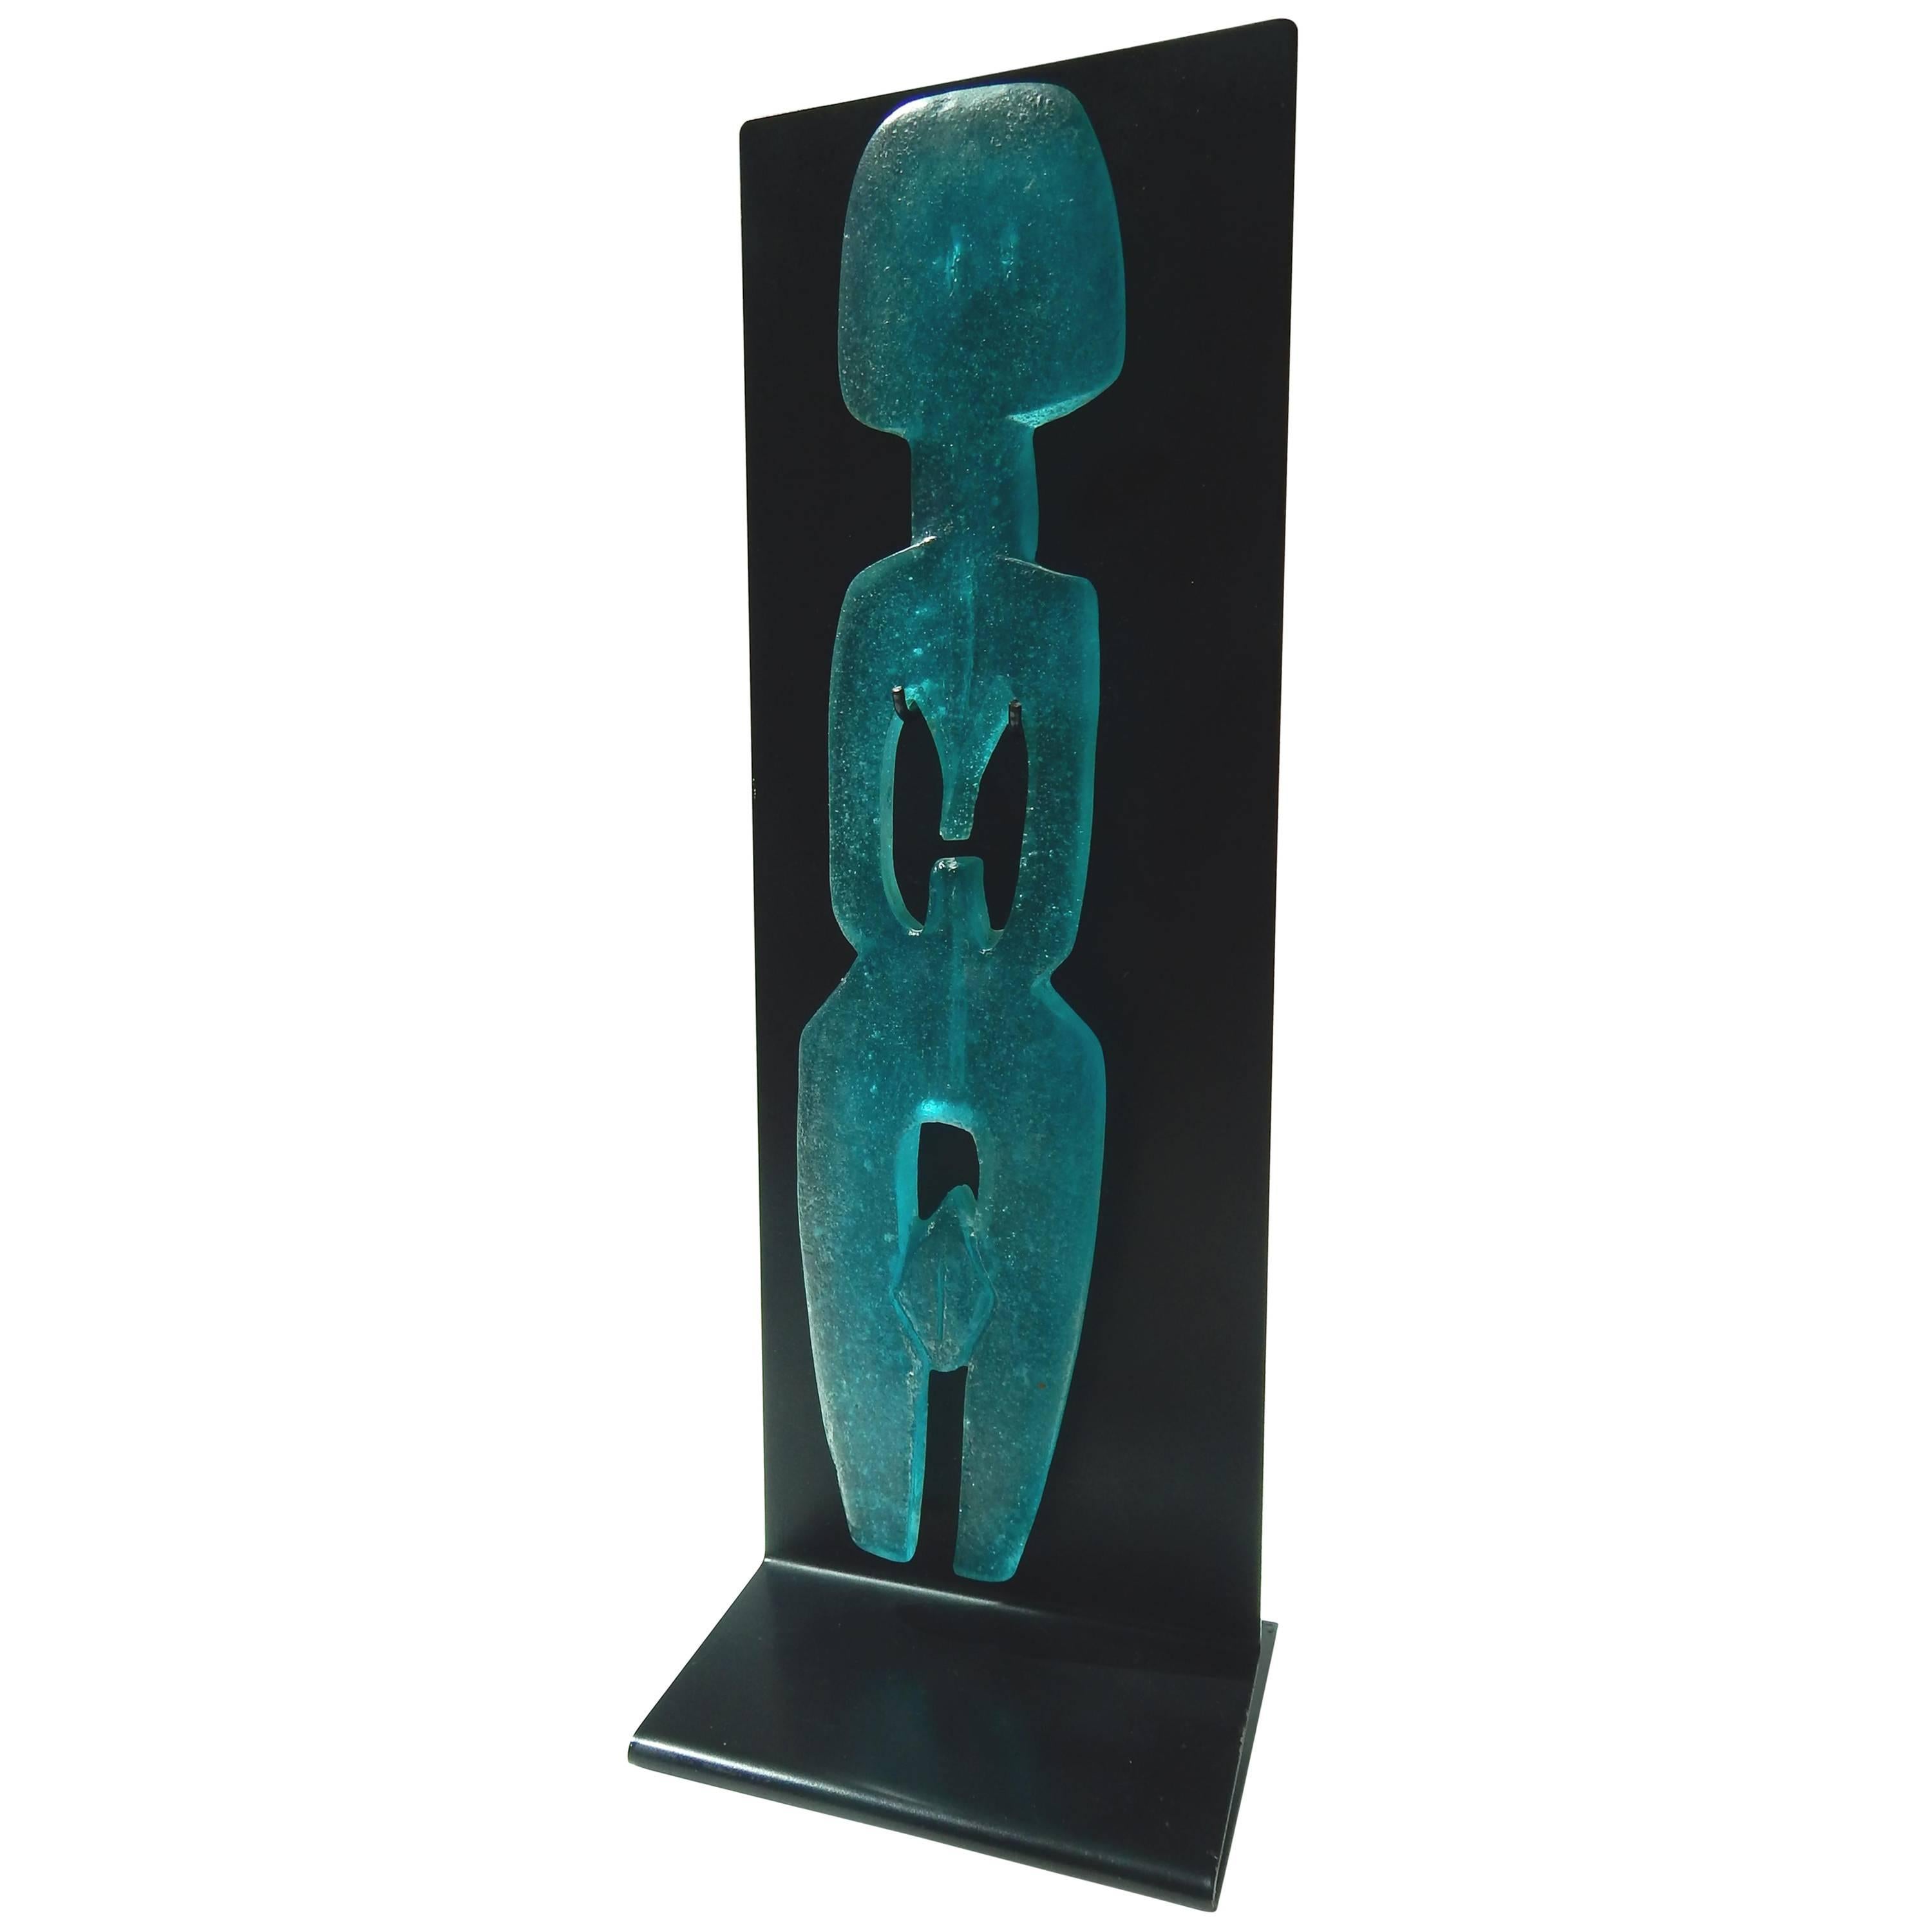 Thomas Gleb Blue Pate de Verre Glass Sculpture for Daum